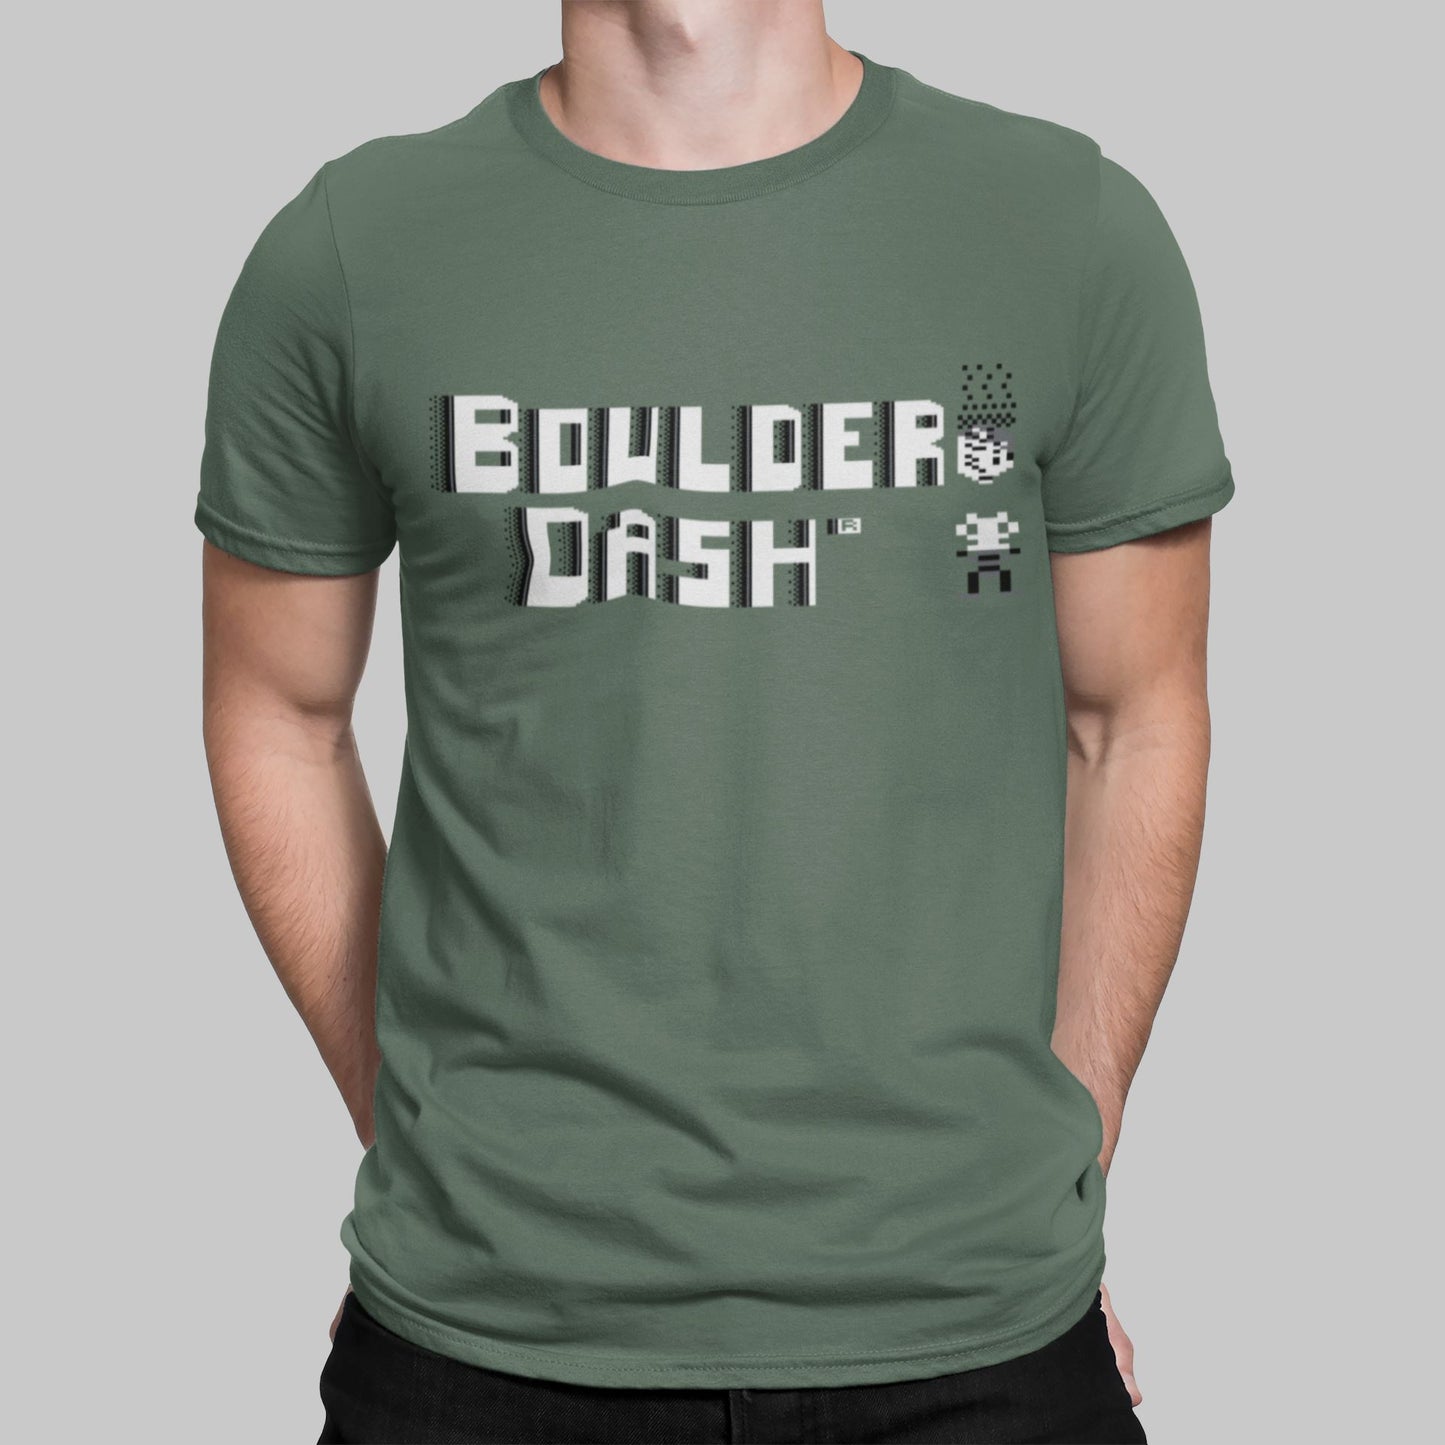 Boulder Dash Black Retro Gaming T-Shirt T-Shirt Seven Squared Small 34-36" Military Green 